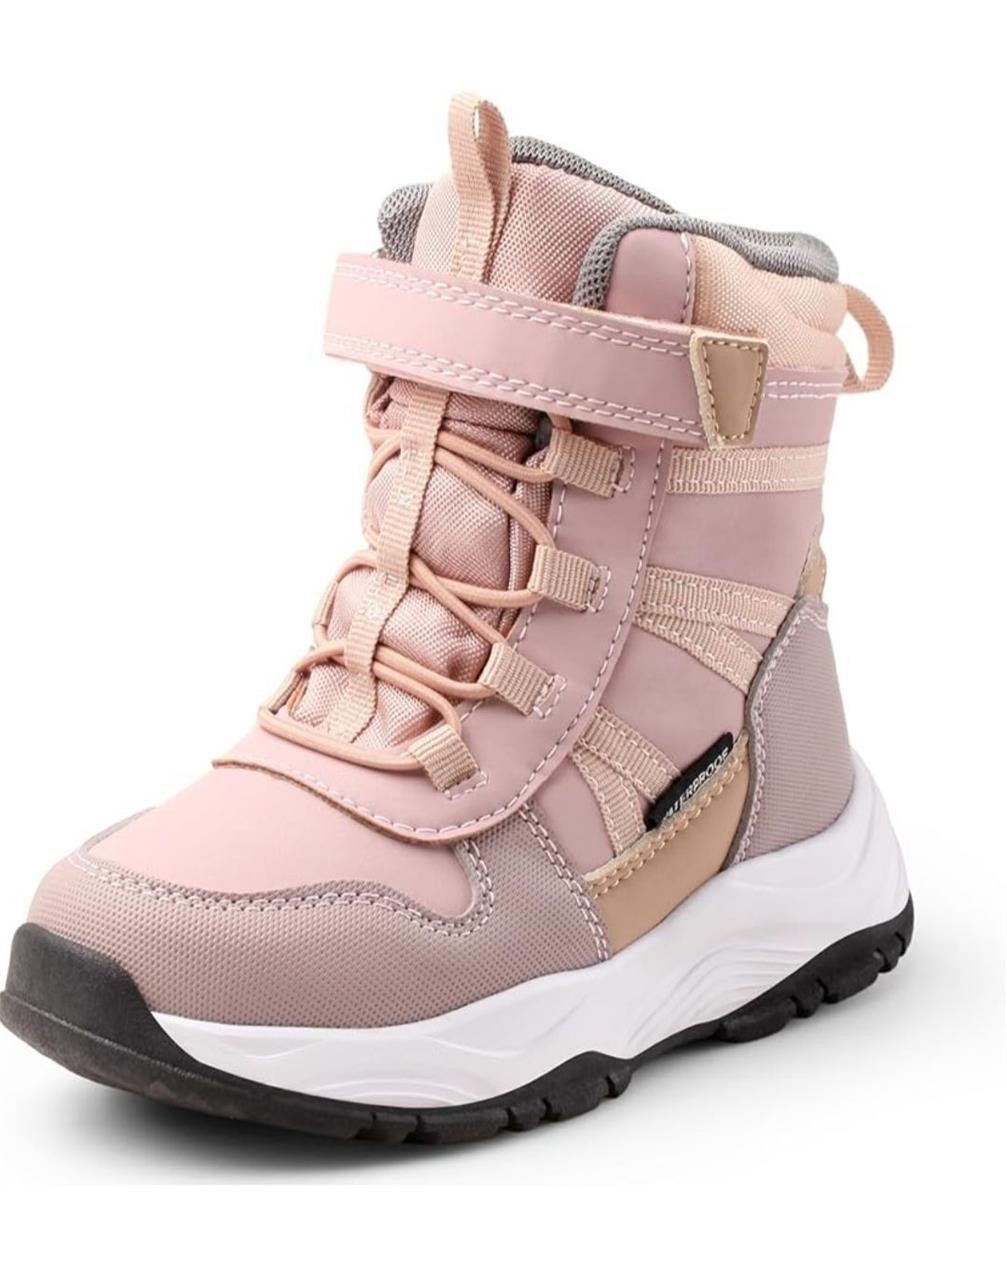 ($69) Kids Waterproof Winter Snow Boots Girls